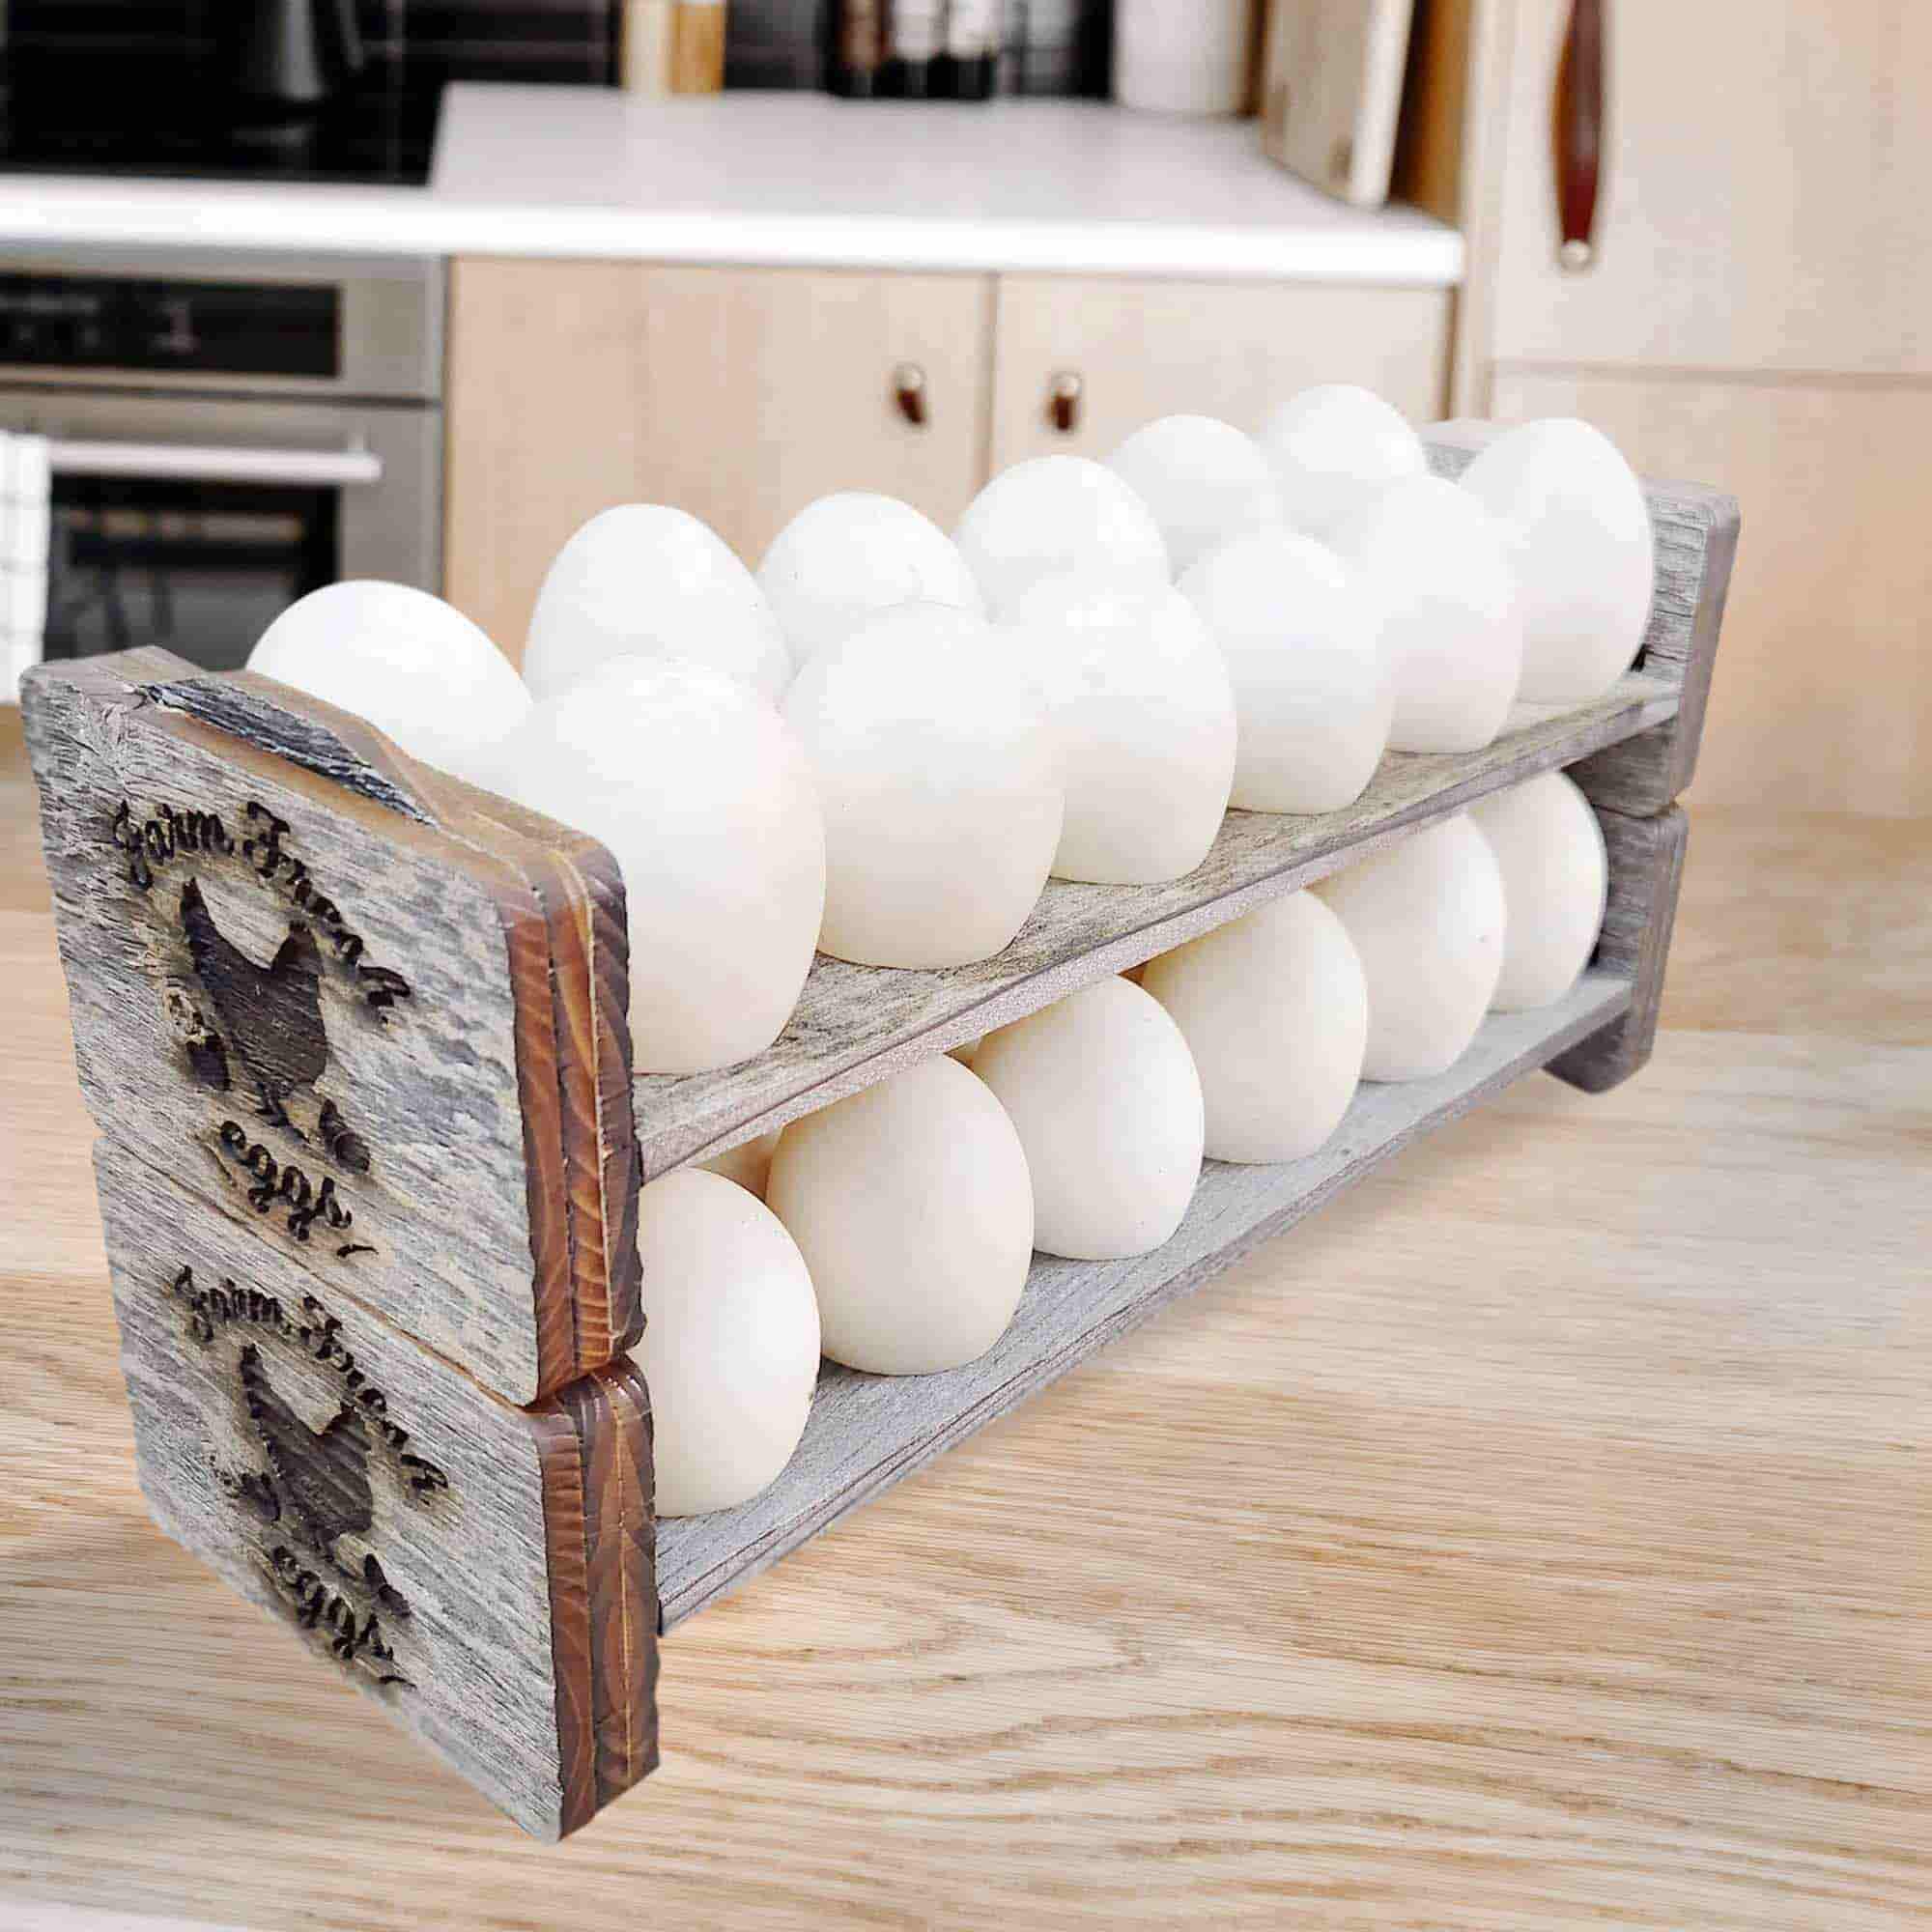  Wooden Egg Holder Countertop Egg Storage Trays Hold